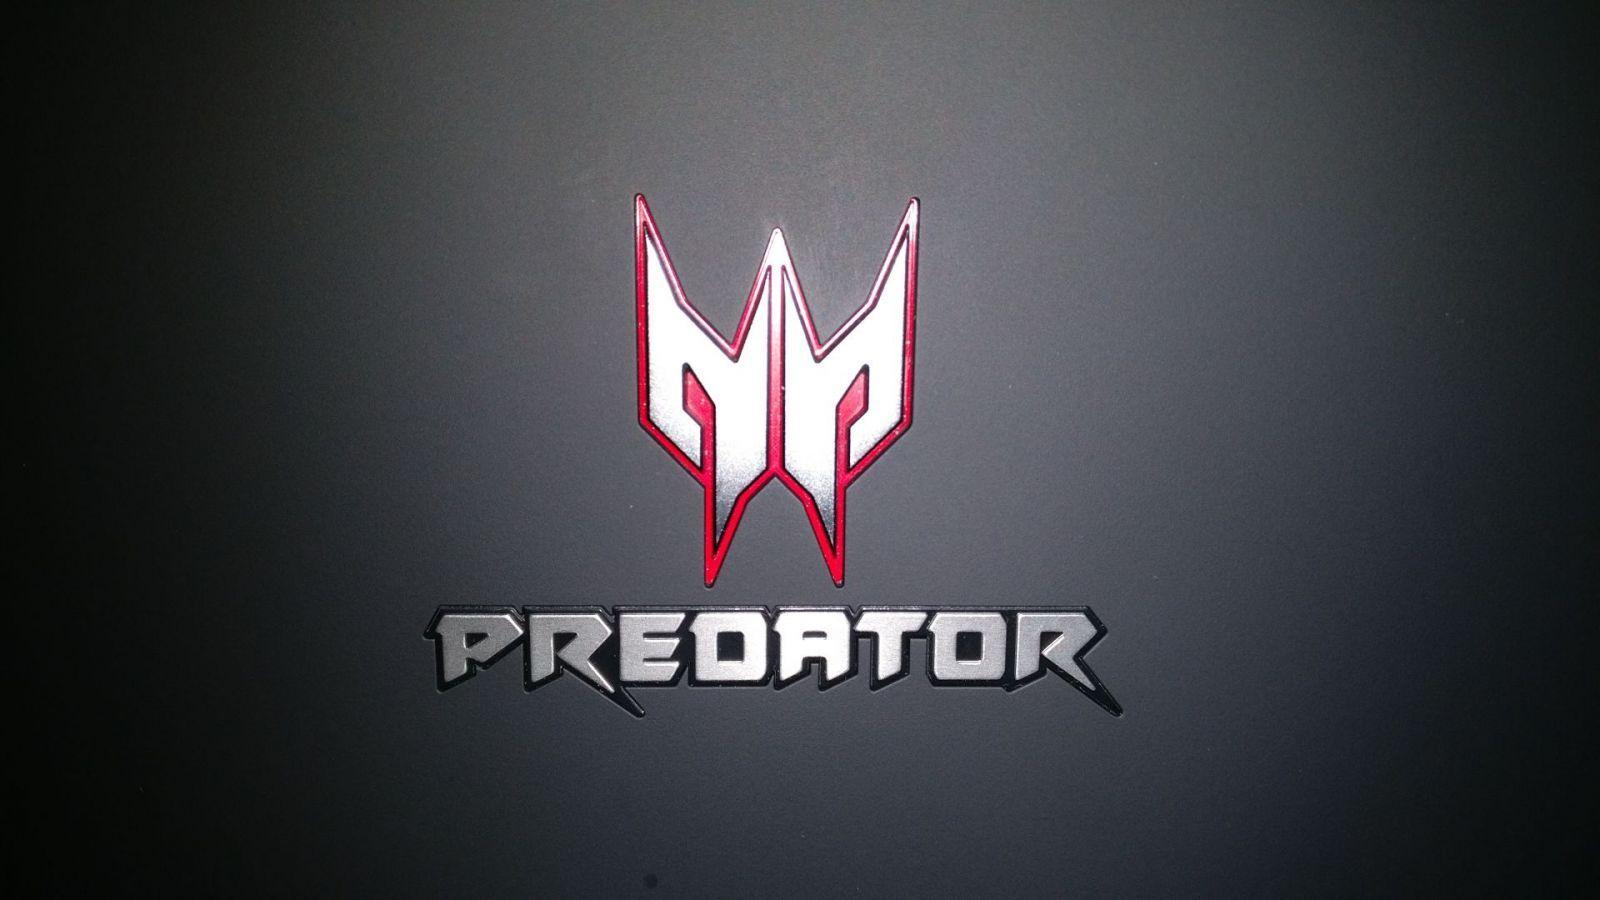 Acer Predator Logo - Acer Predator Wallpapers - Wallpaper Cave